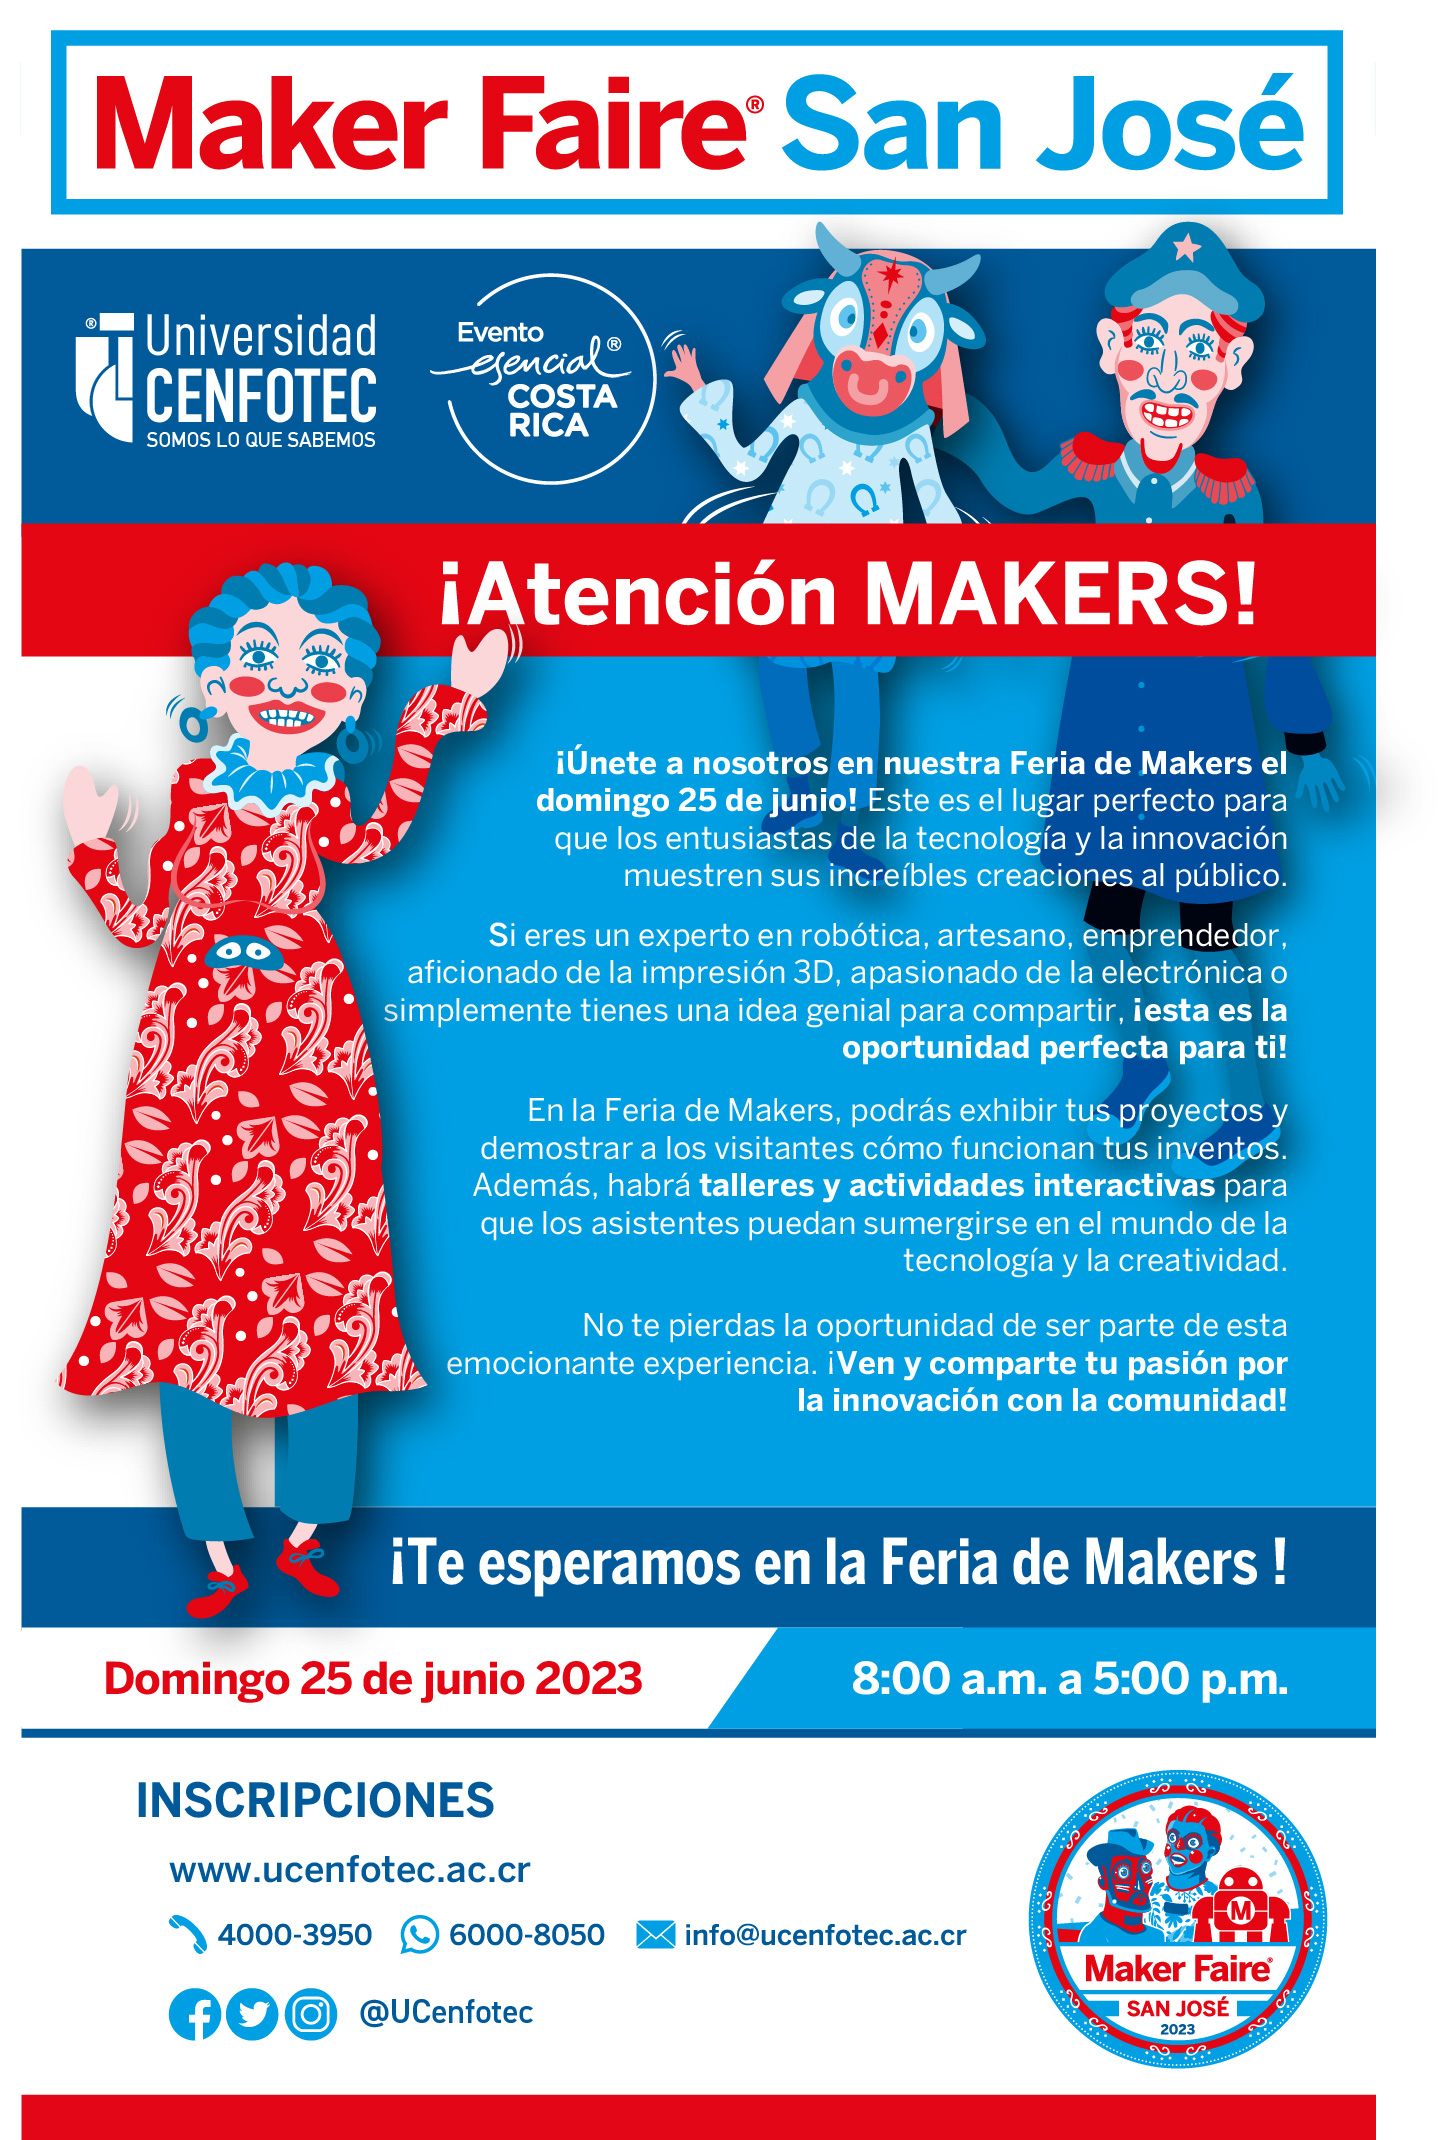 Call to Makers
Maker Faire San José 2023